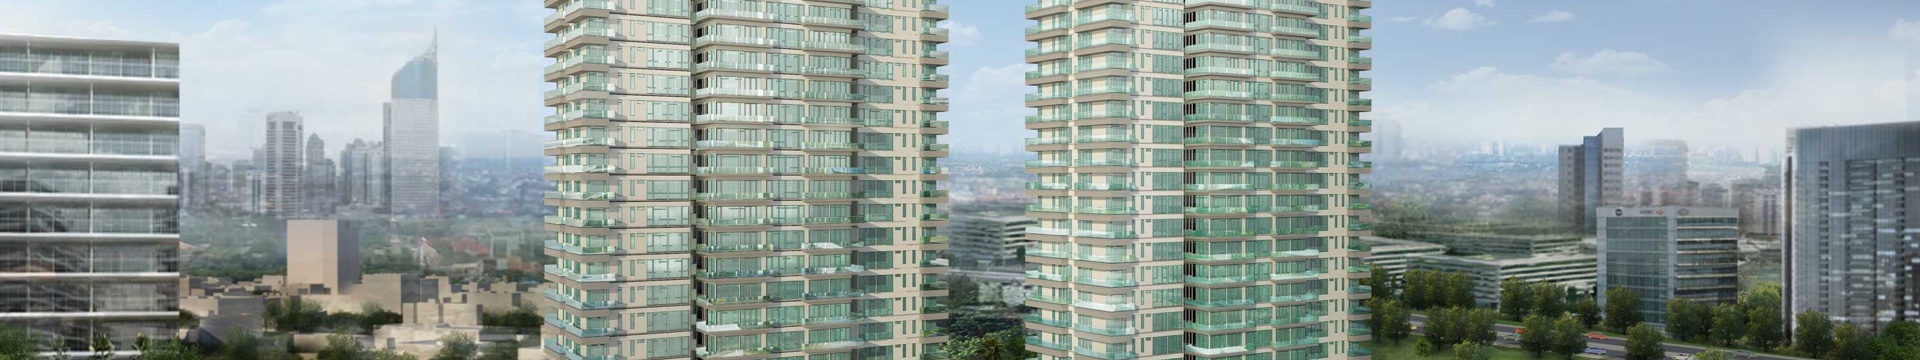 Jakarta Apartment Prices Up in Second Quarter